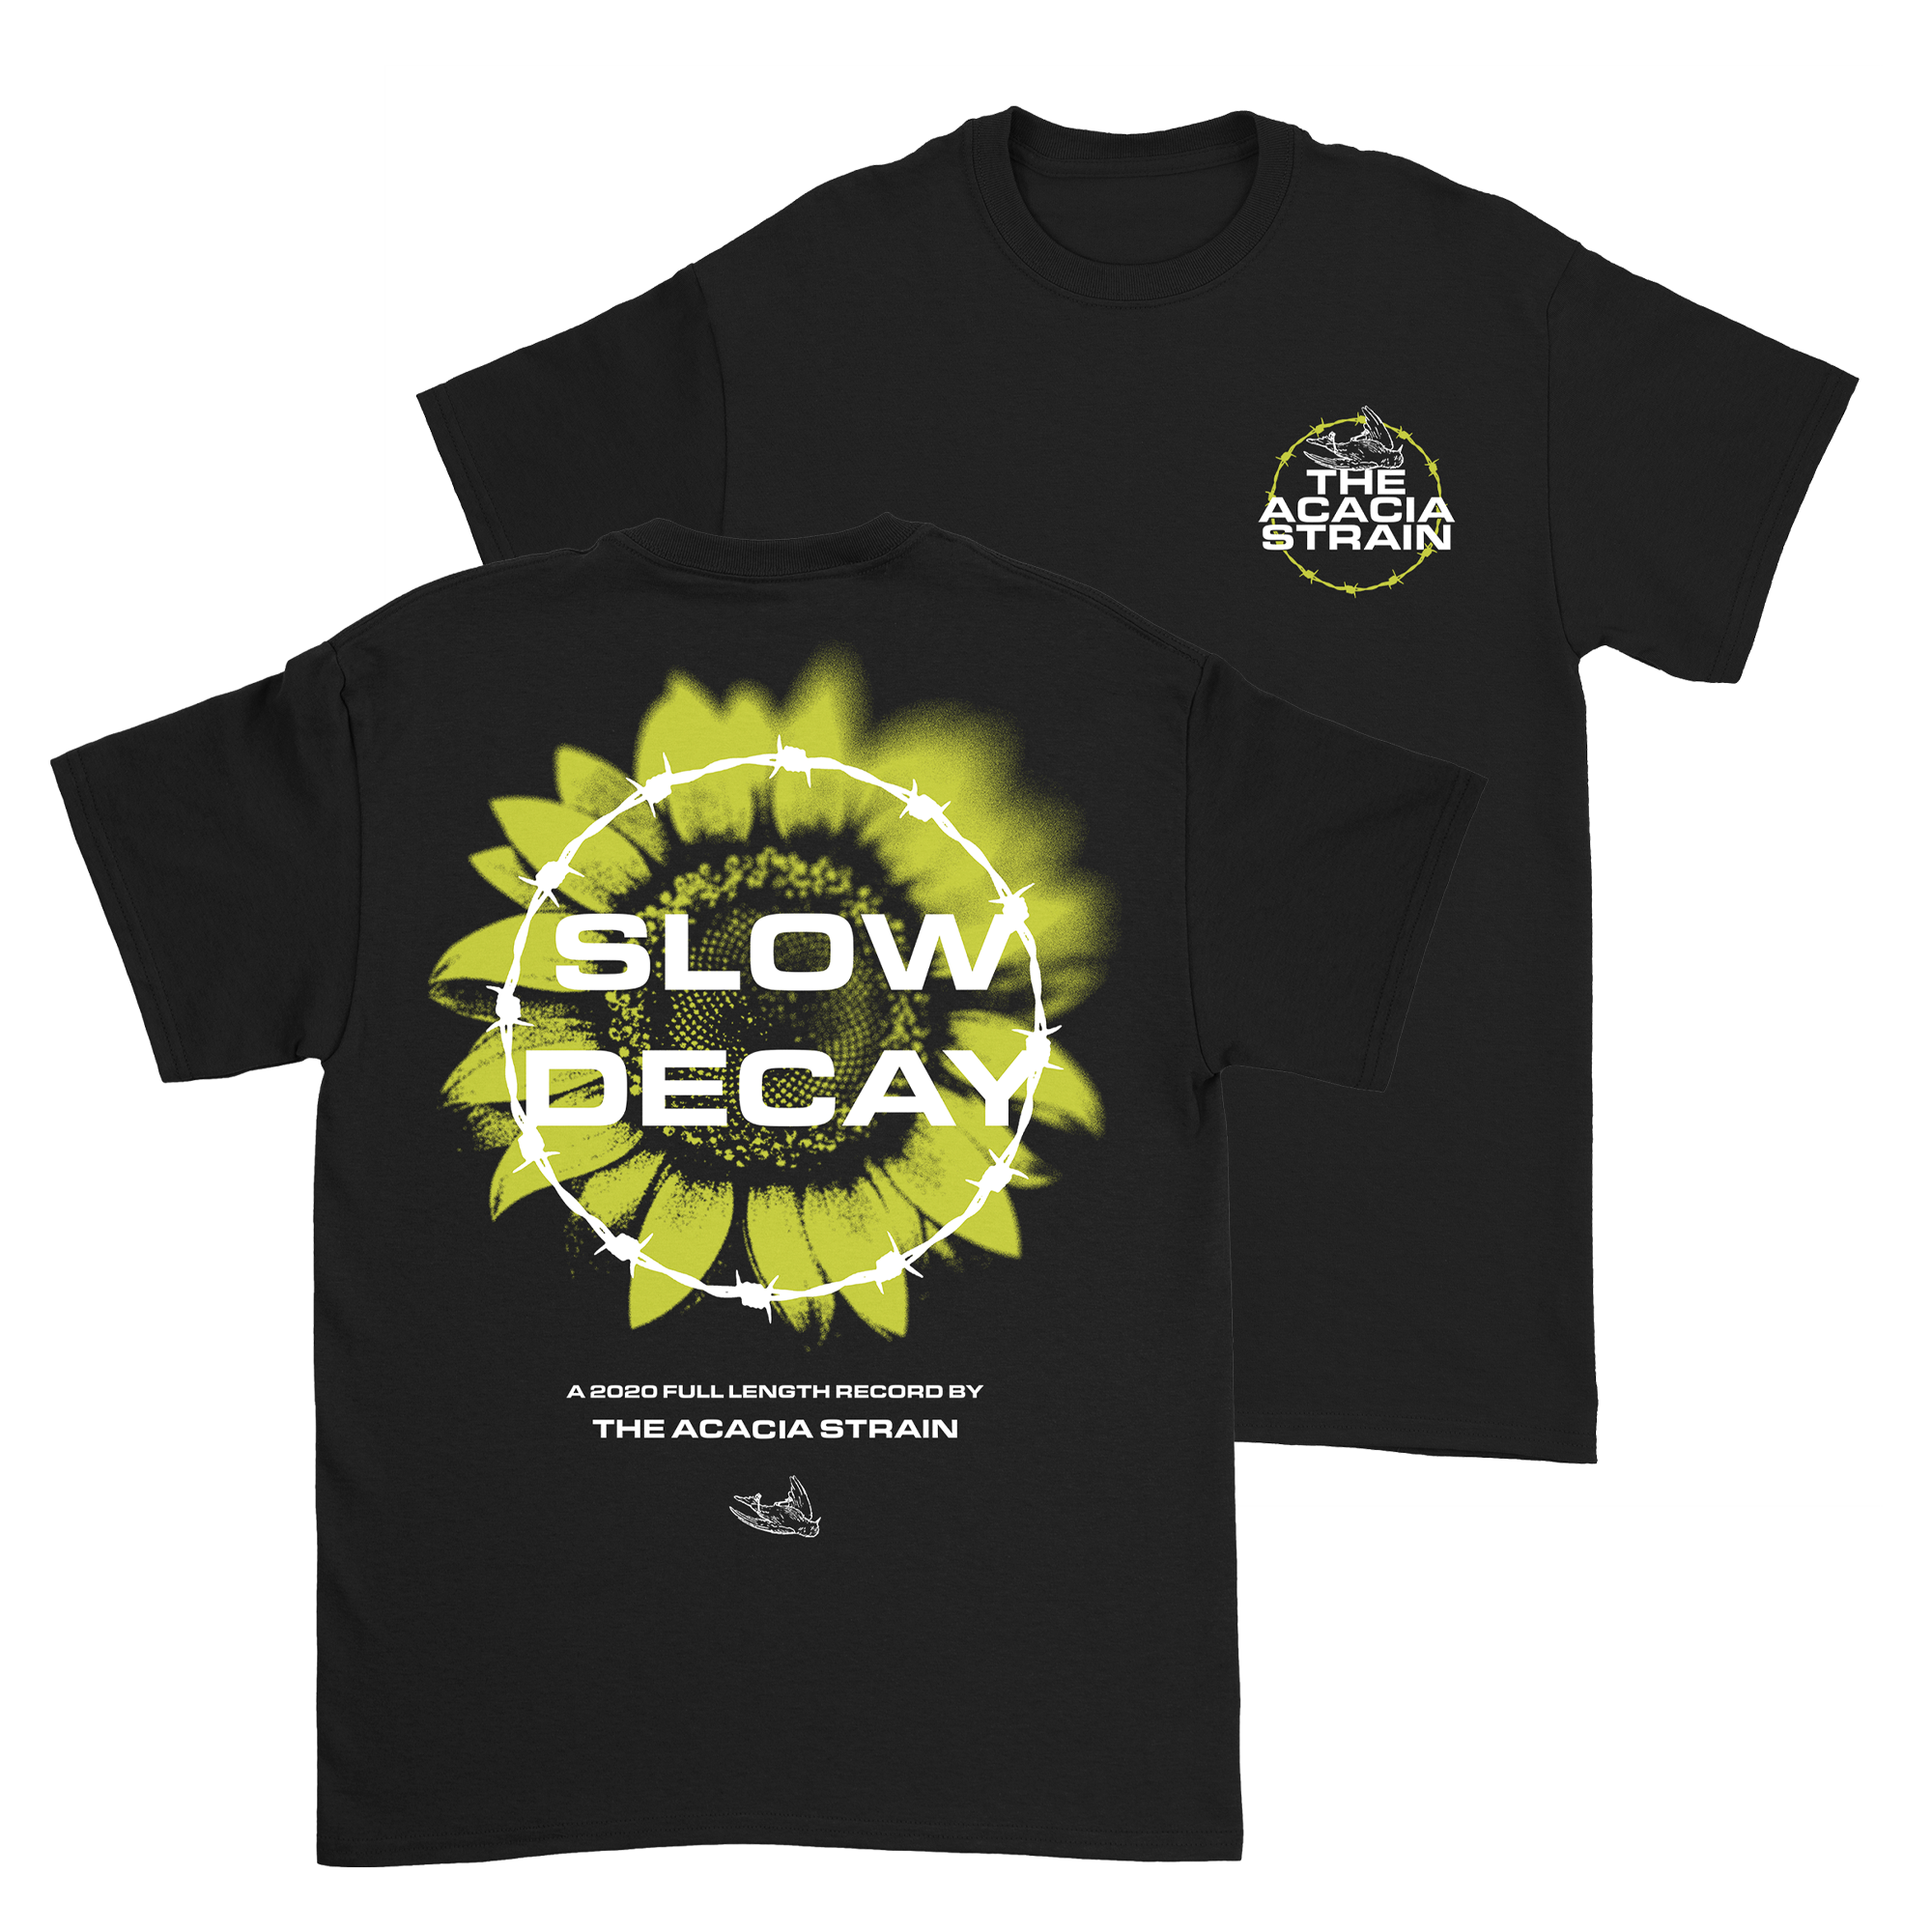 The Acacia Strain - Slow Decay T-Shirt